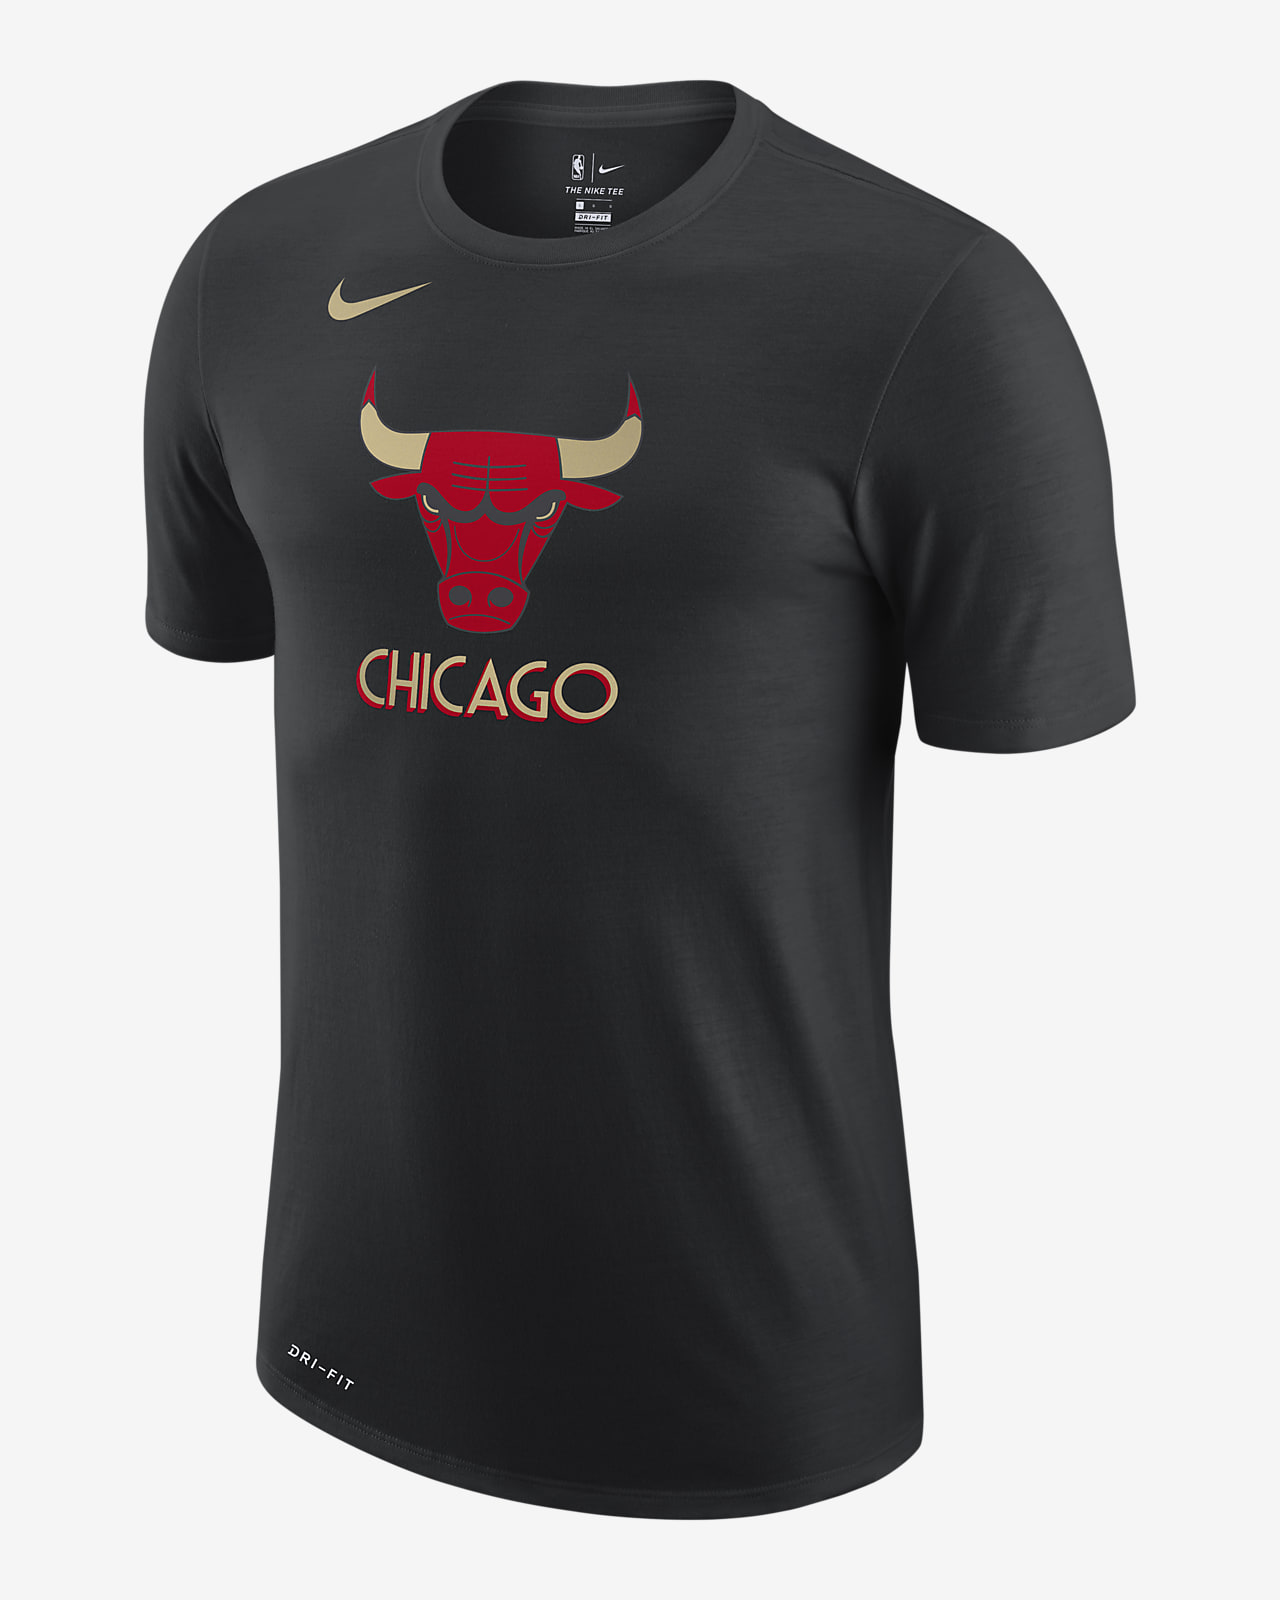 chicago bulls city edition shirt